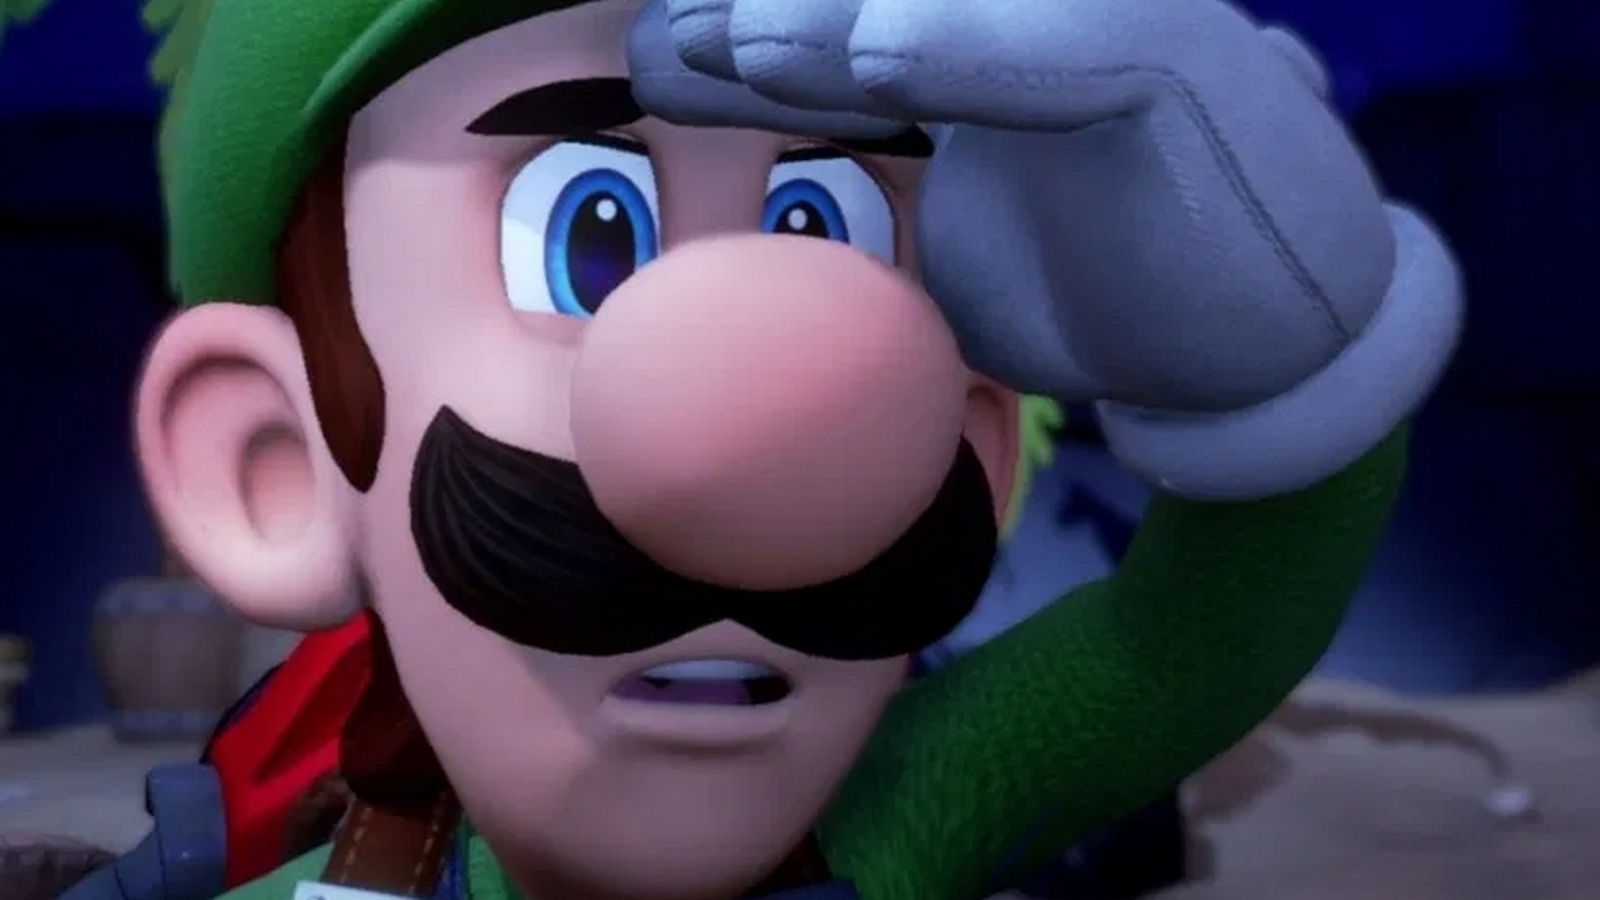 Developer Interview: Next Level Games And Nintendo Talk Luigi's